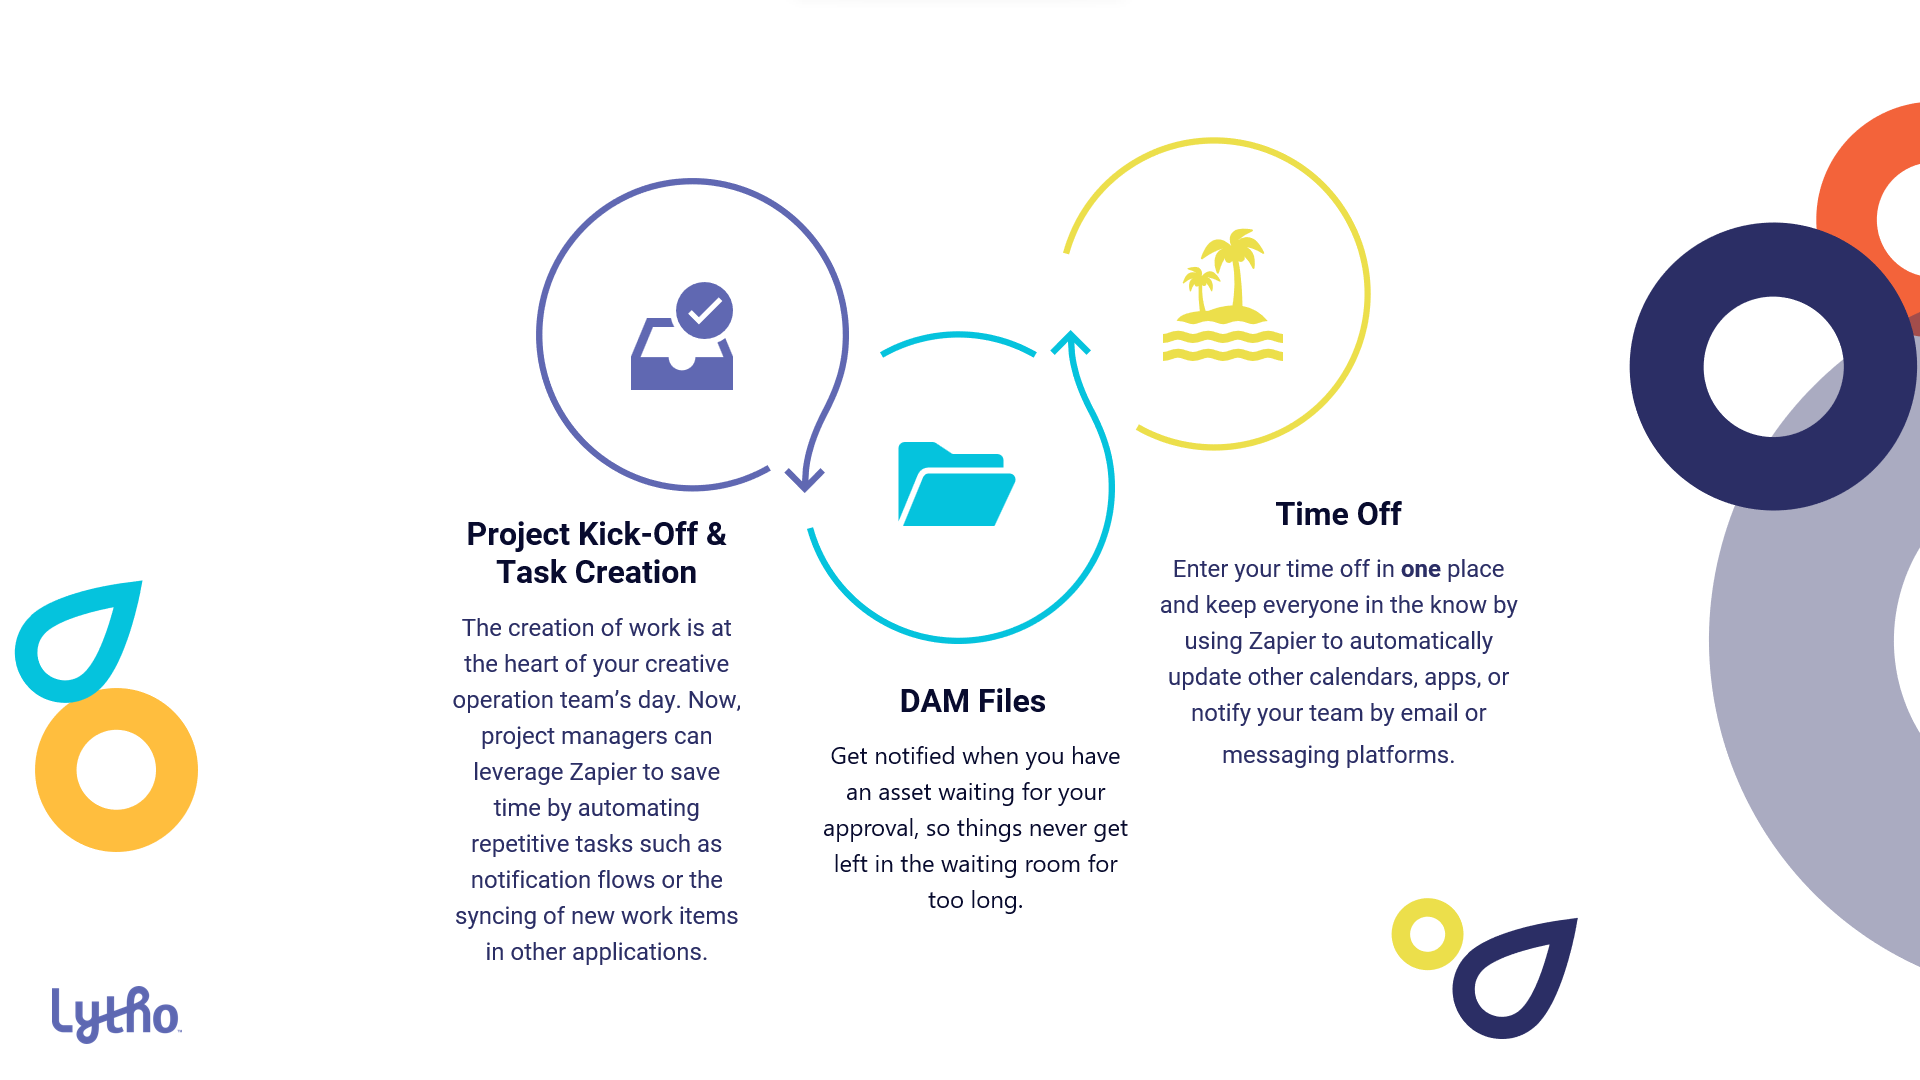 Lytho Zapier Ipaas Project Kick Off Task Creation Dam Files Time Off